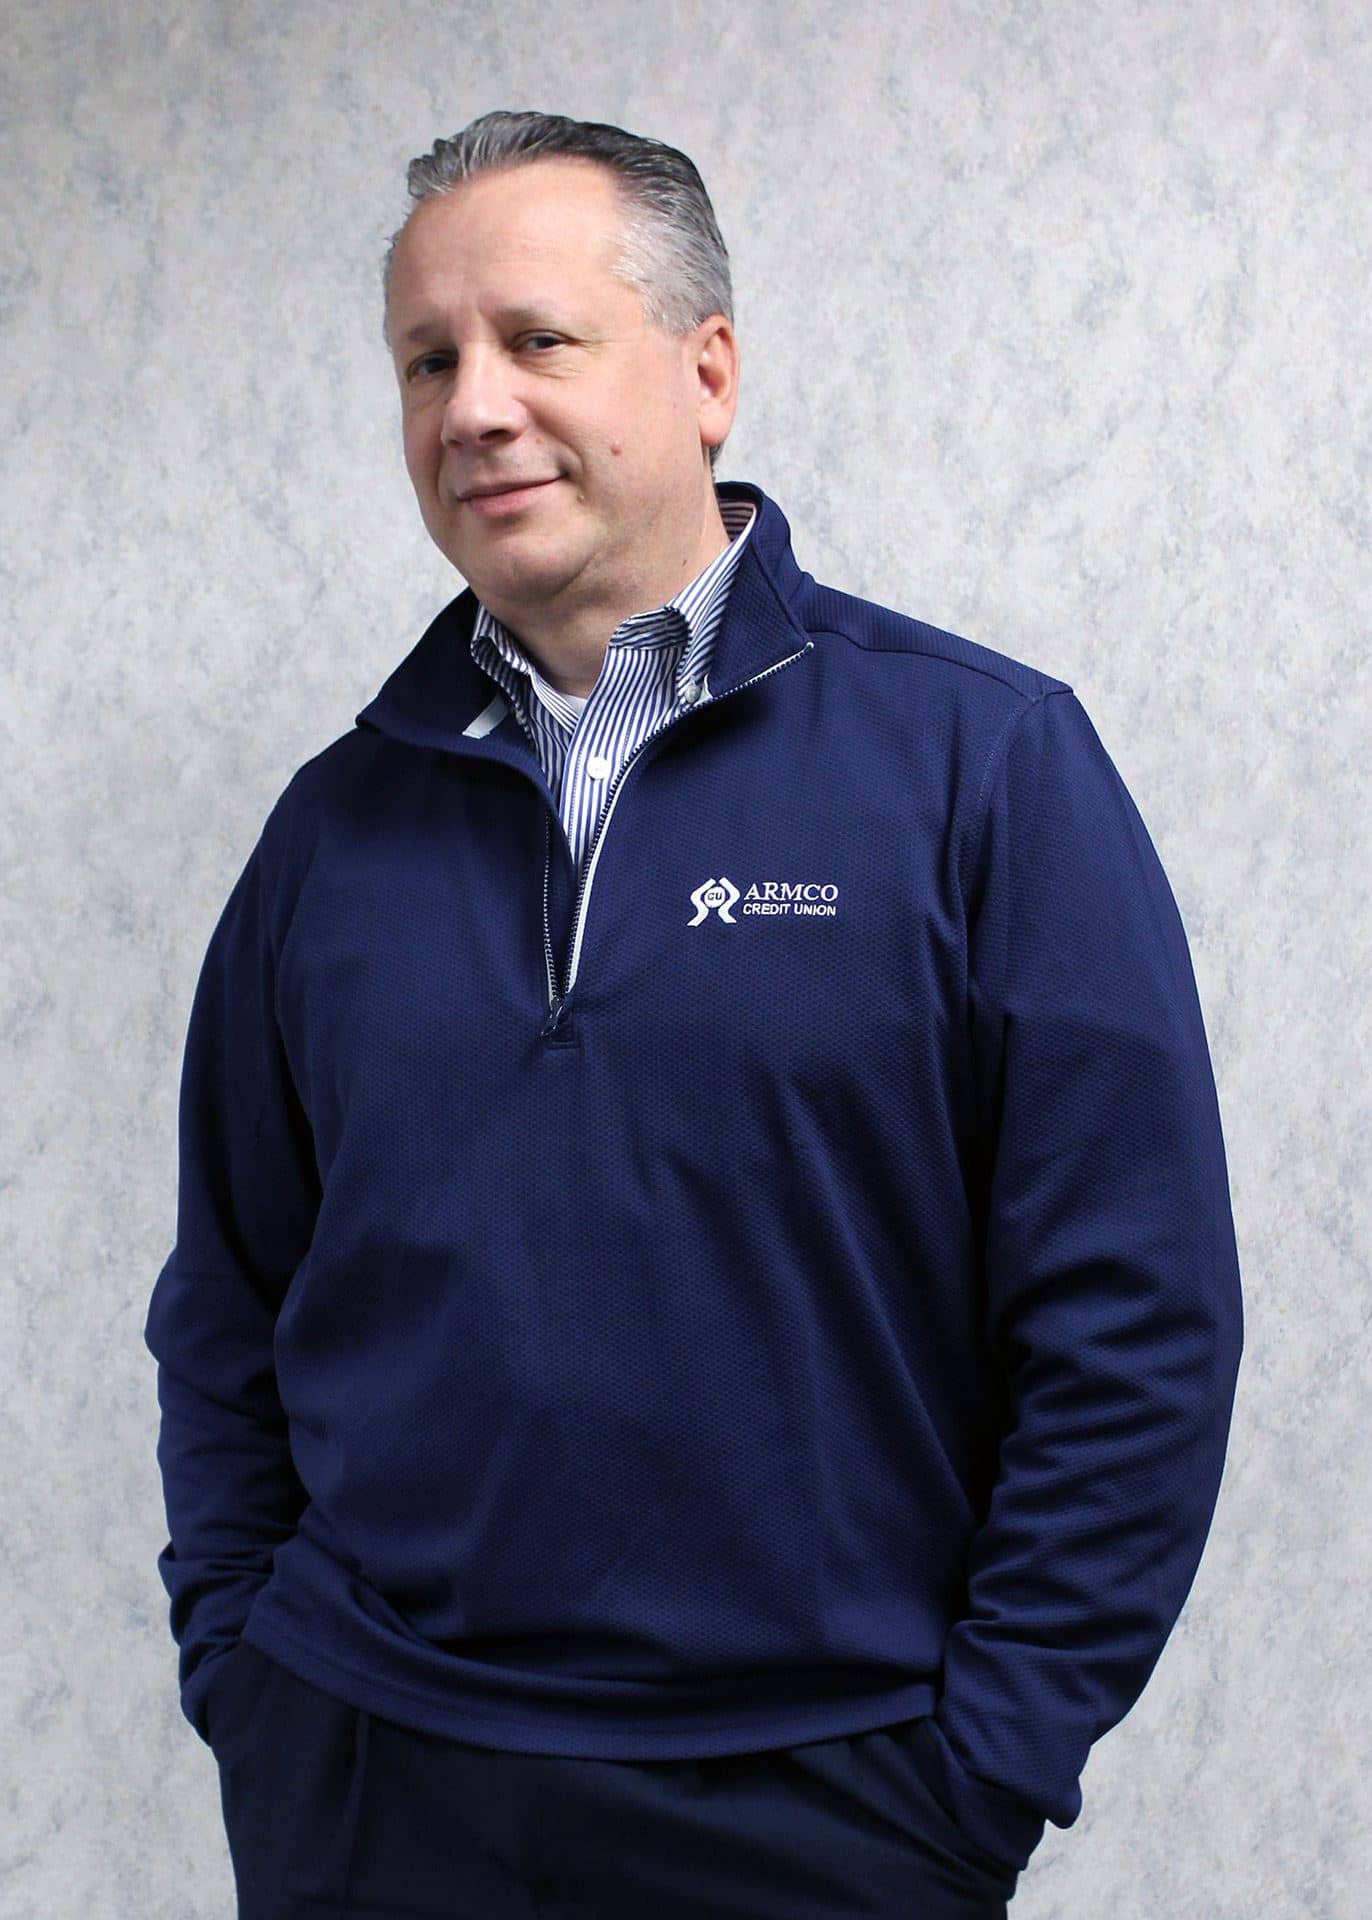 A man wearing the navy Armco CU quarter zip jacket.